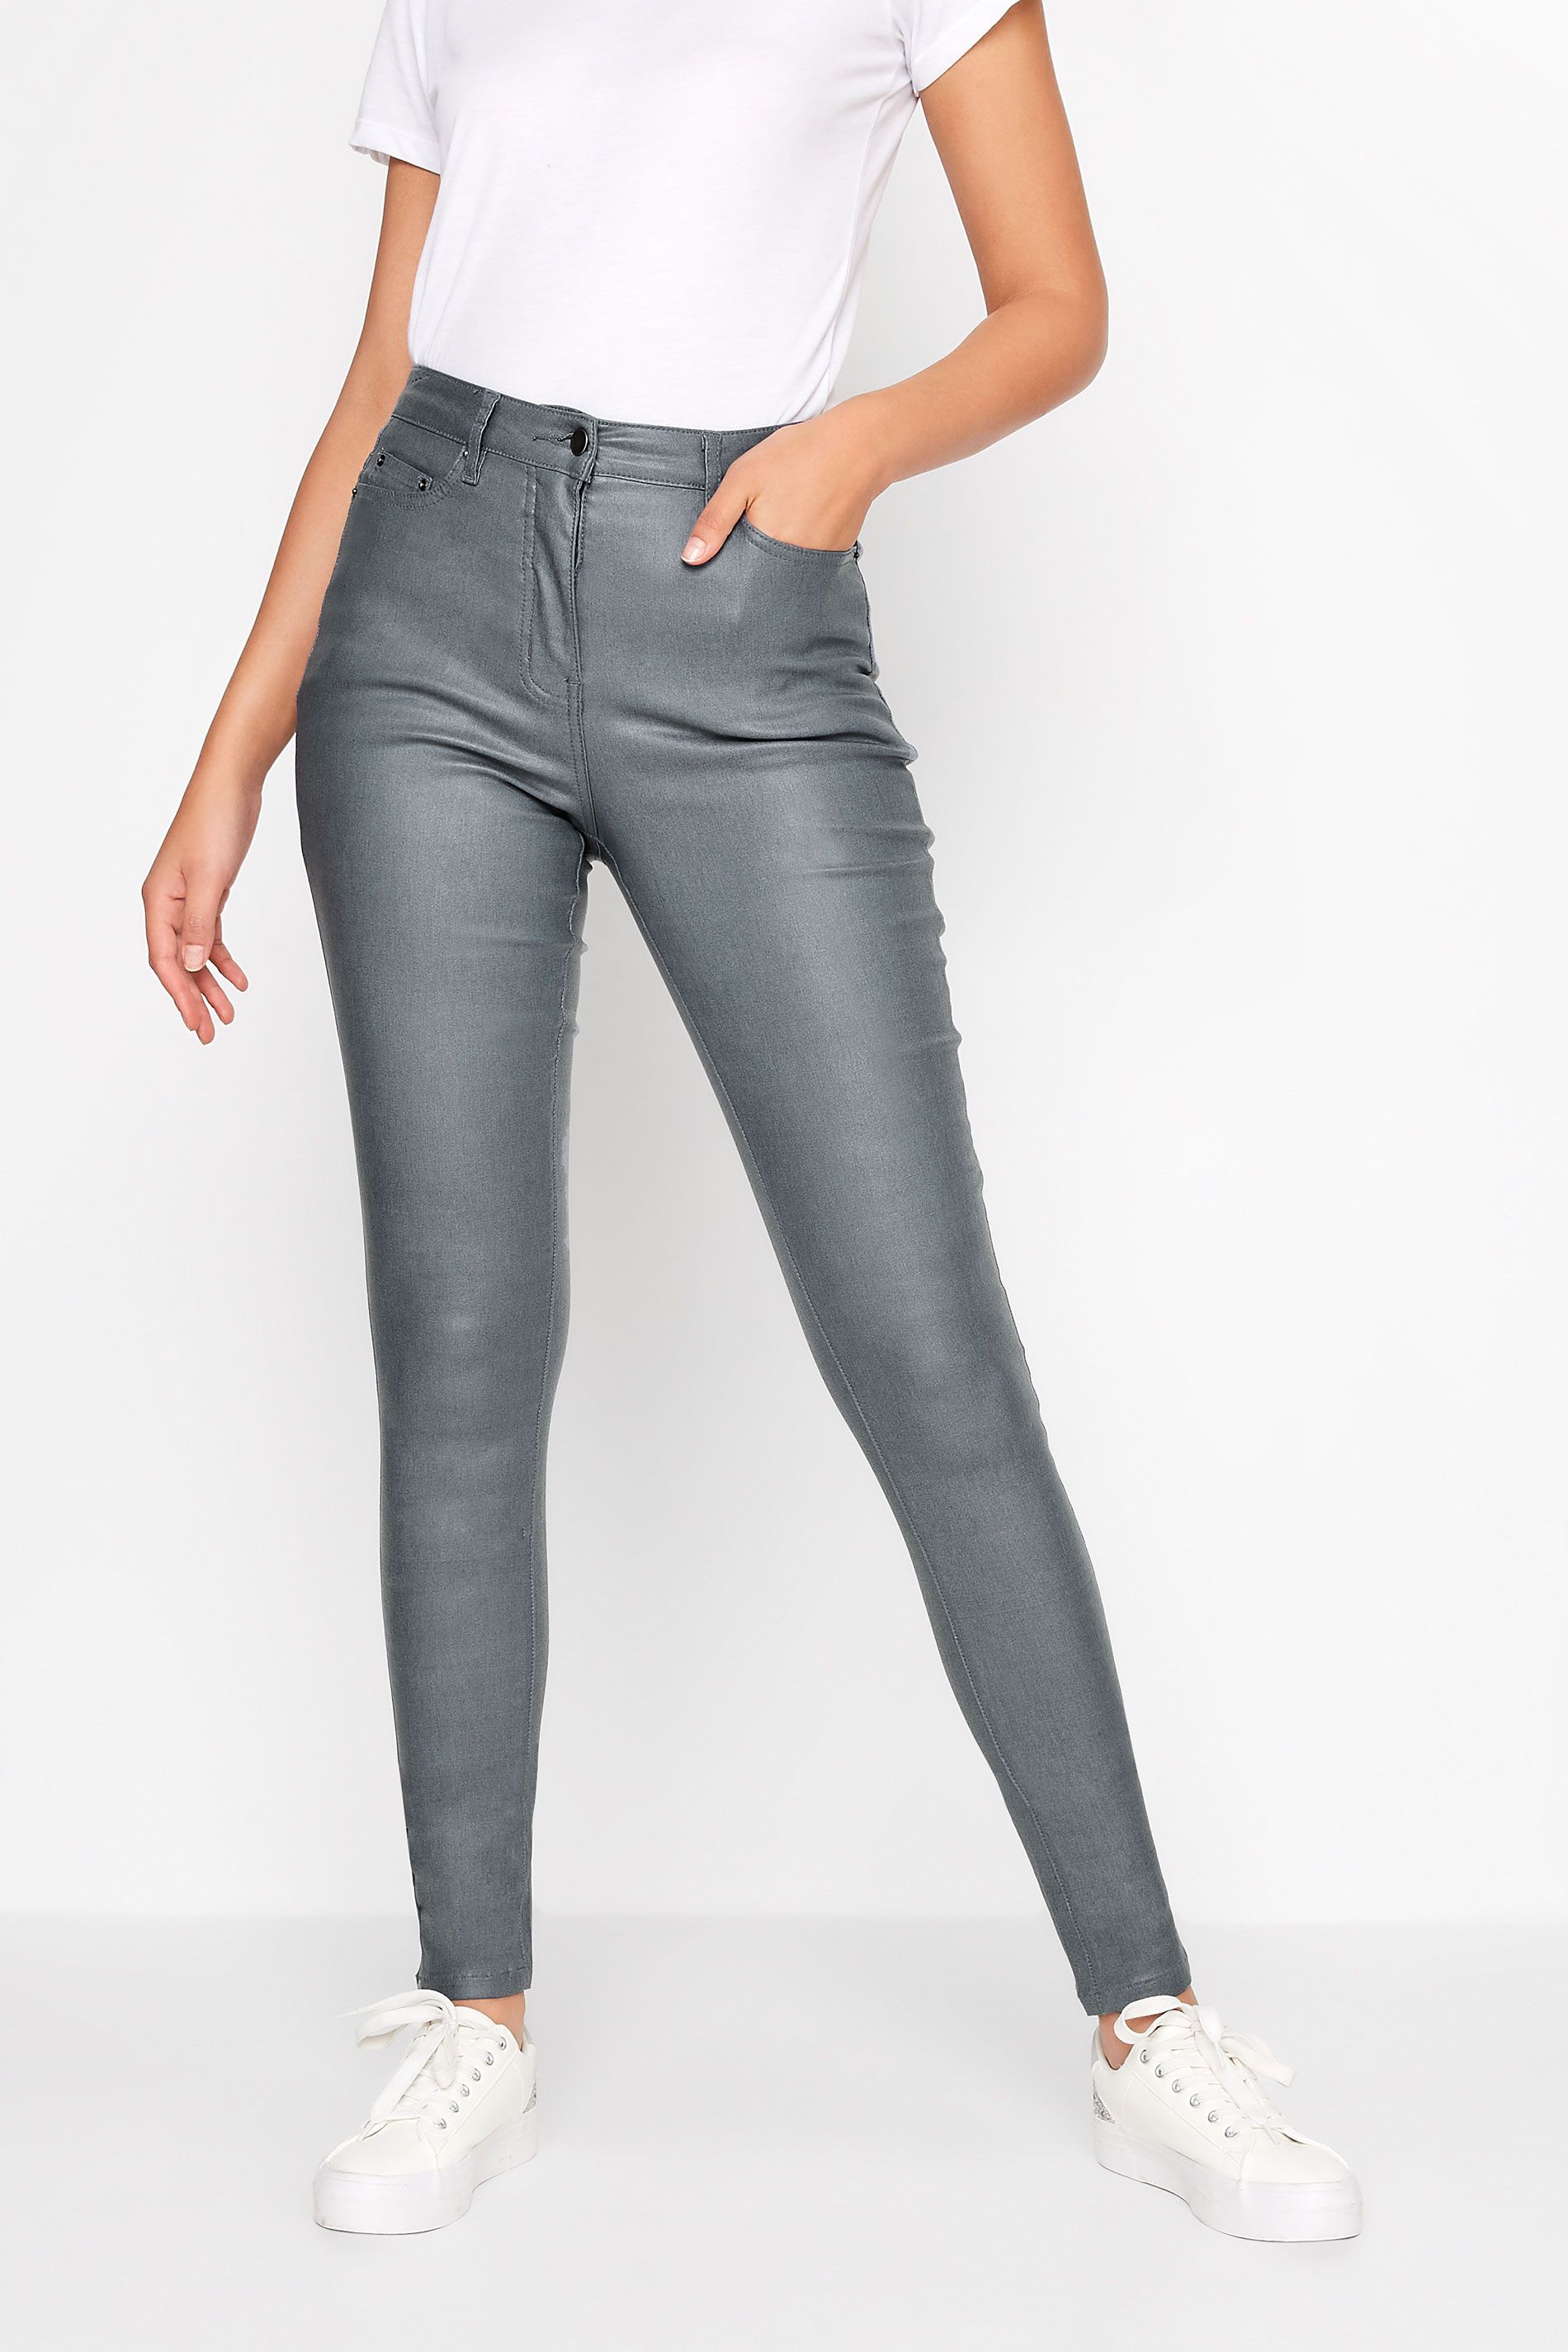 LTS Tall Blue Coated AVA Skinny Jeans | Long Tall Sally